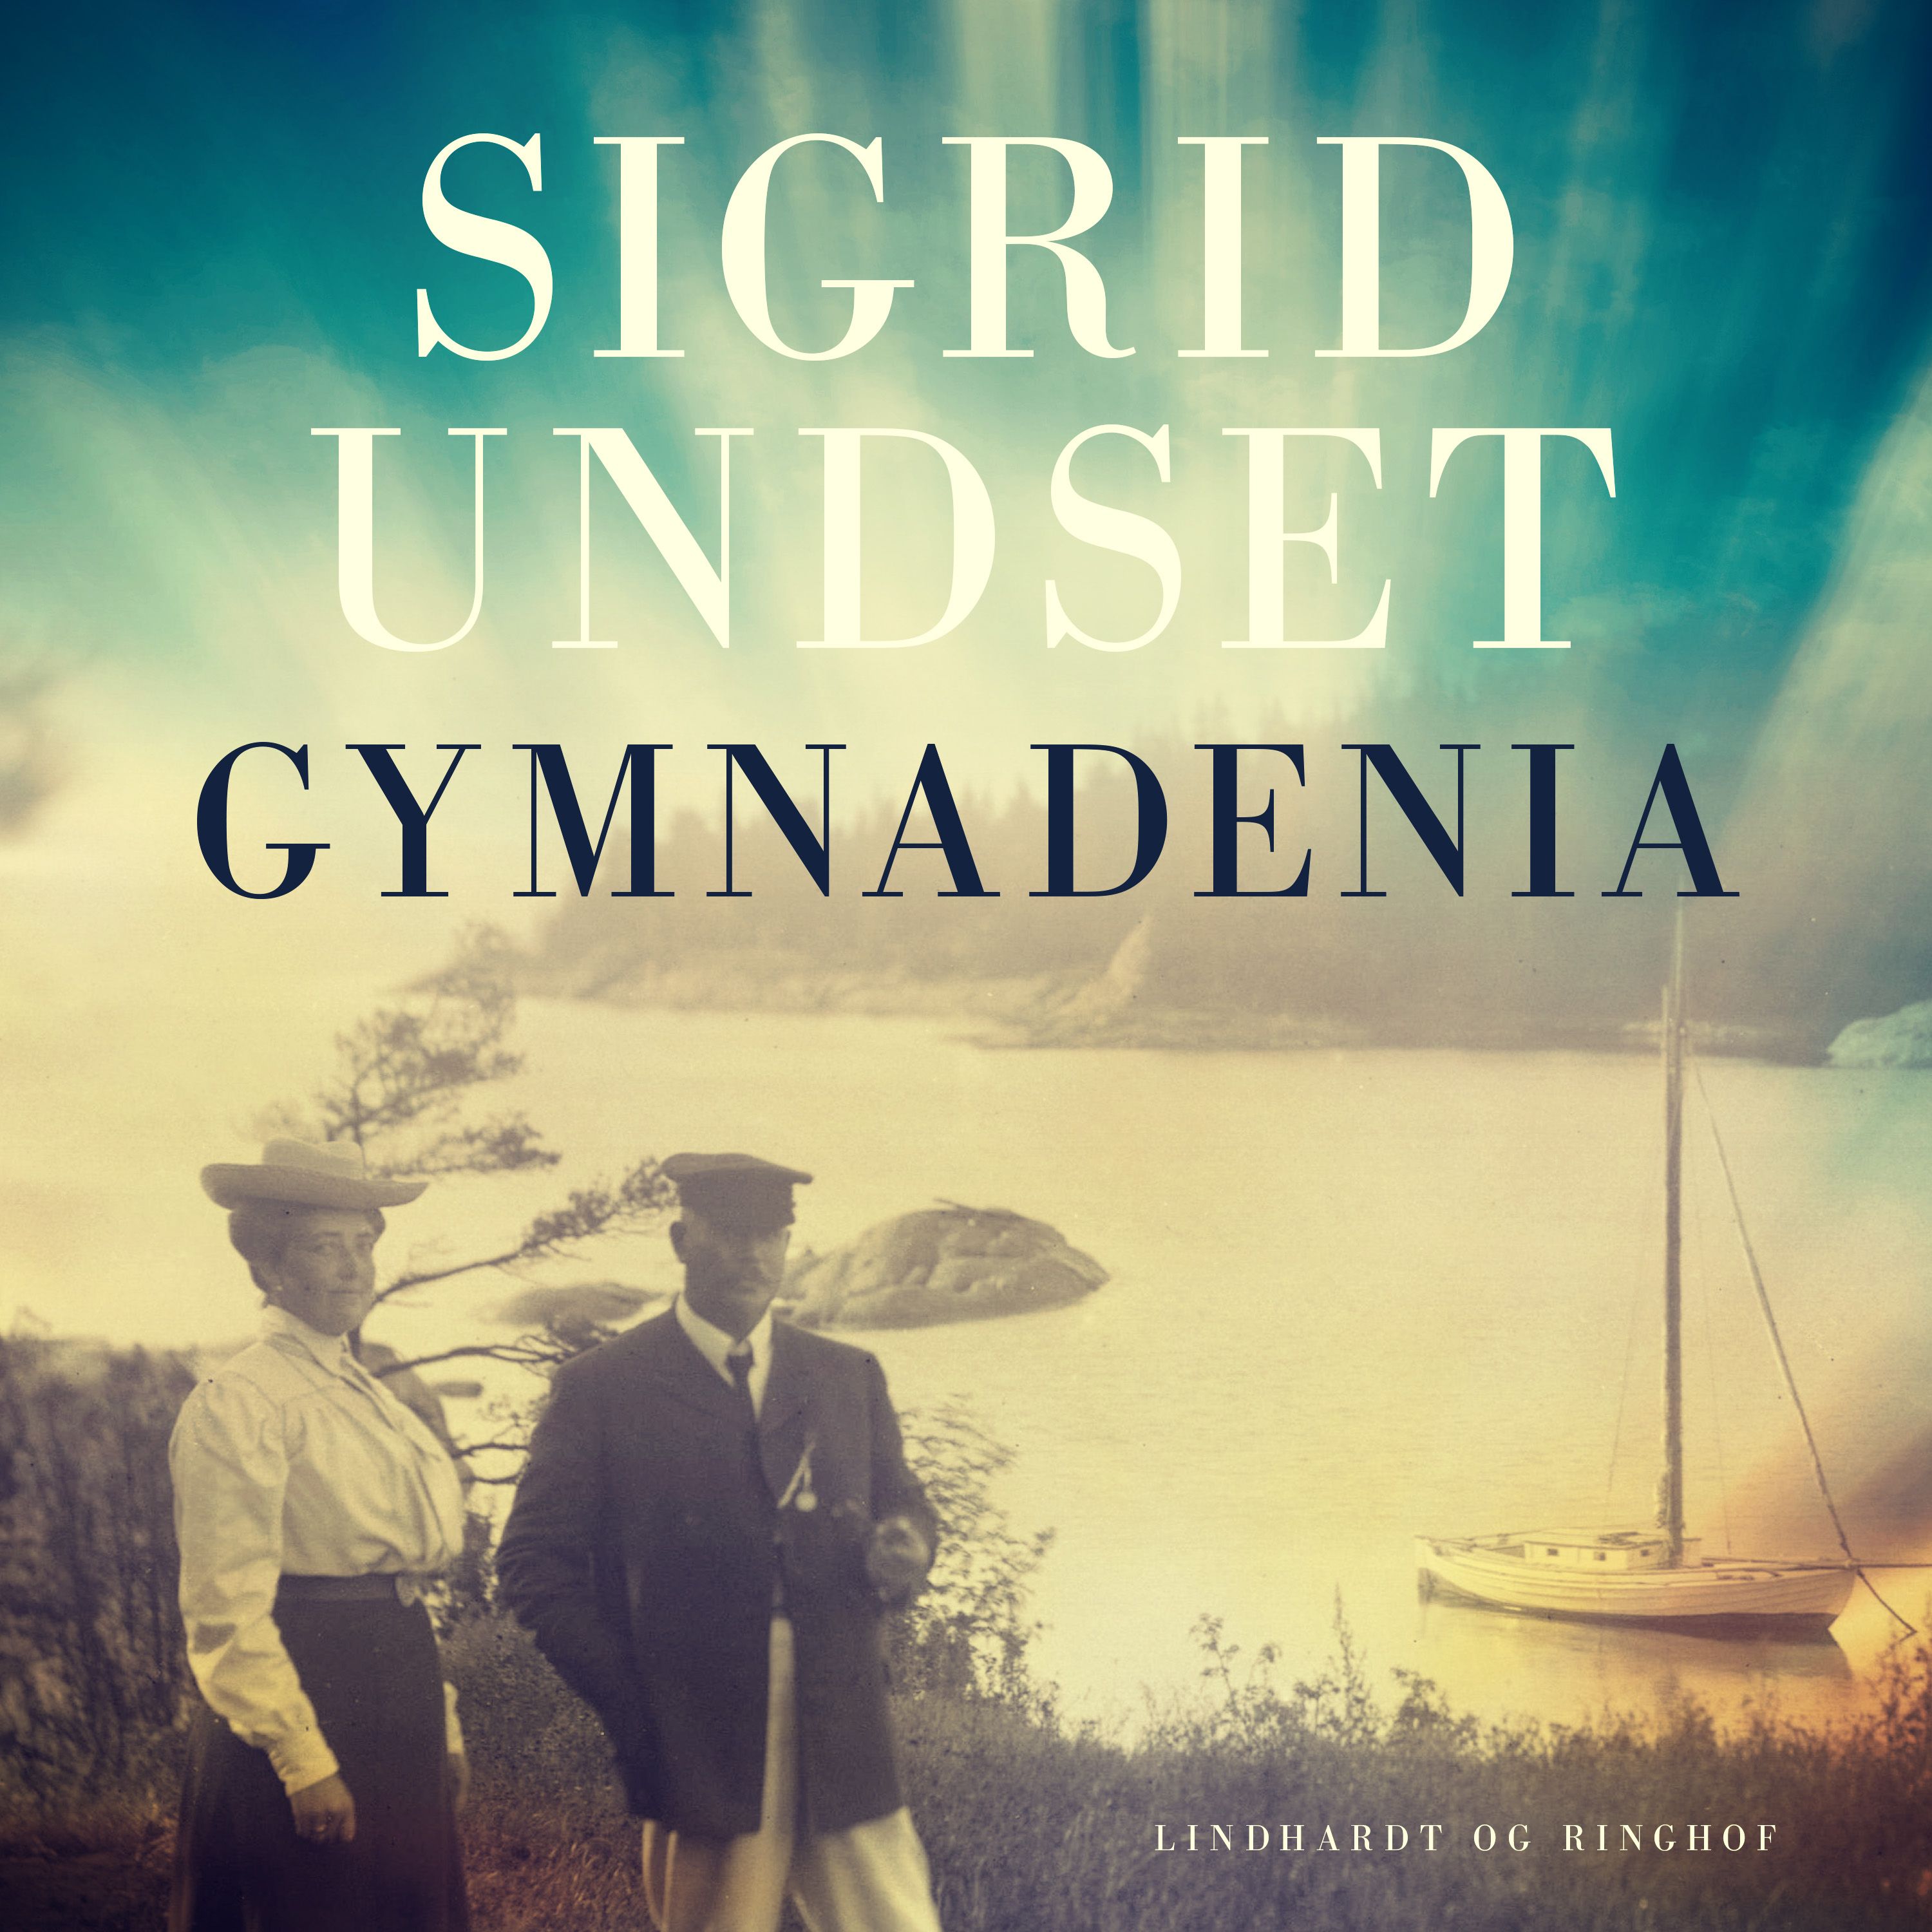 Gymnadenia, lydbog af Sigrid Undset